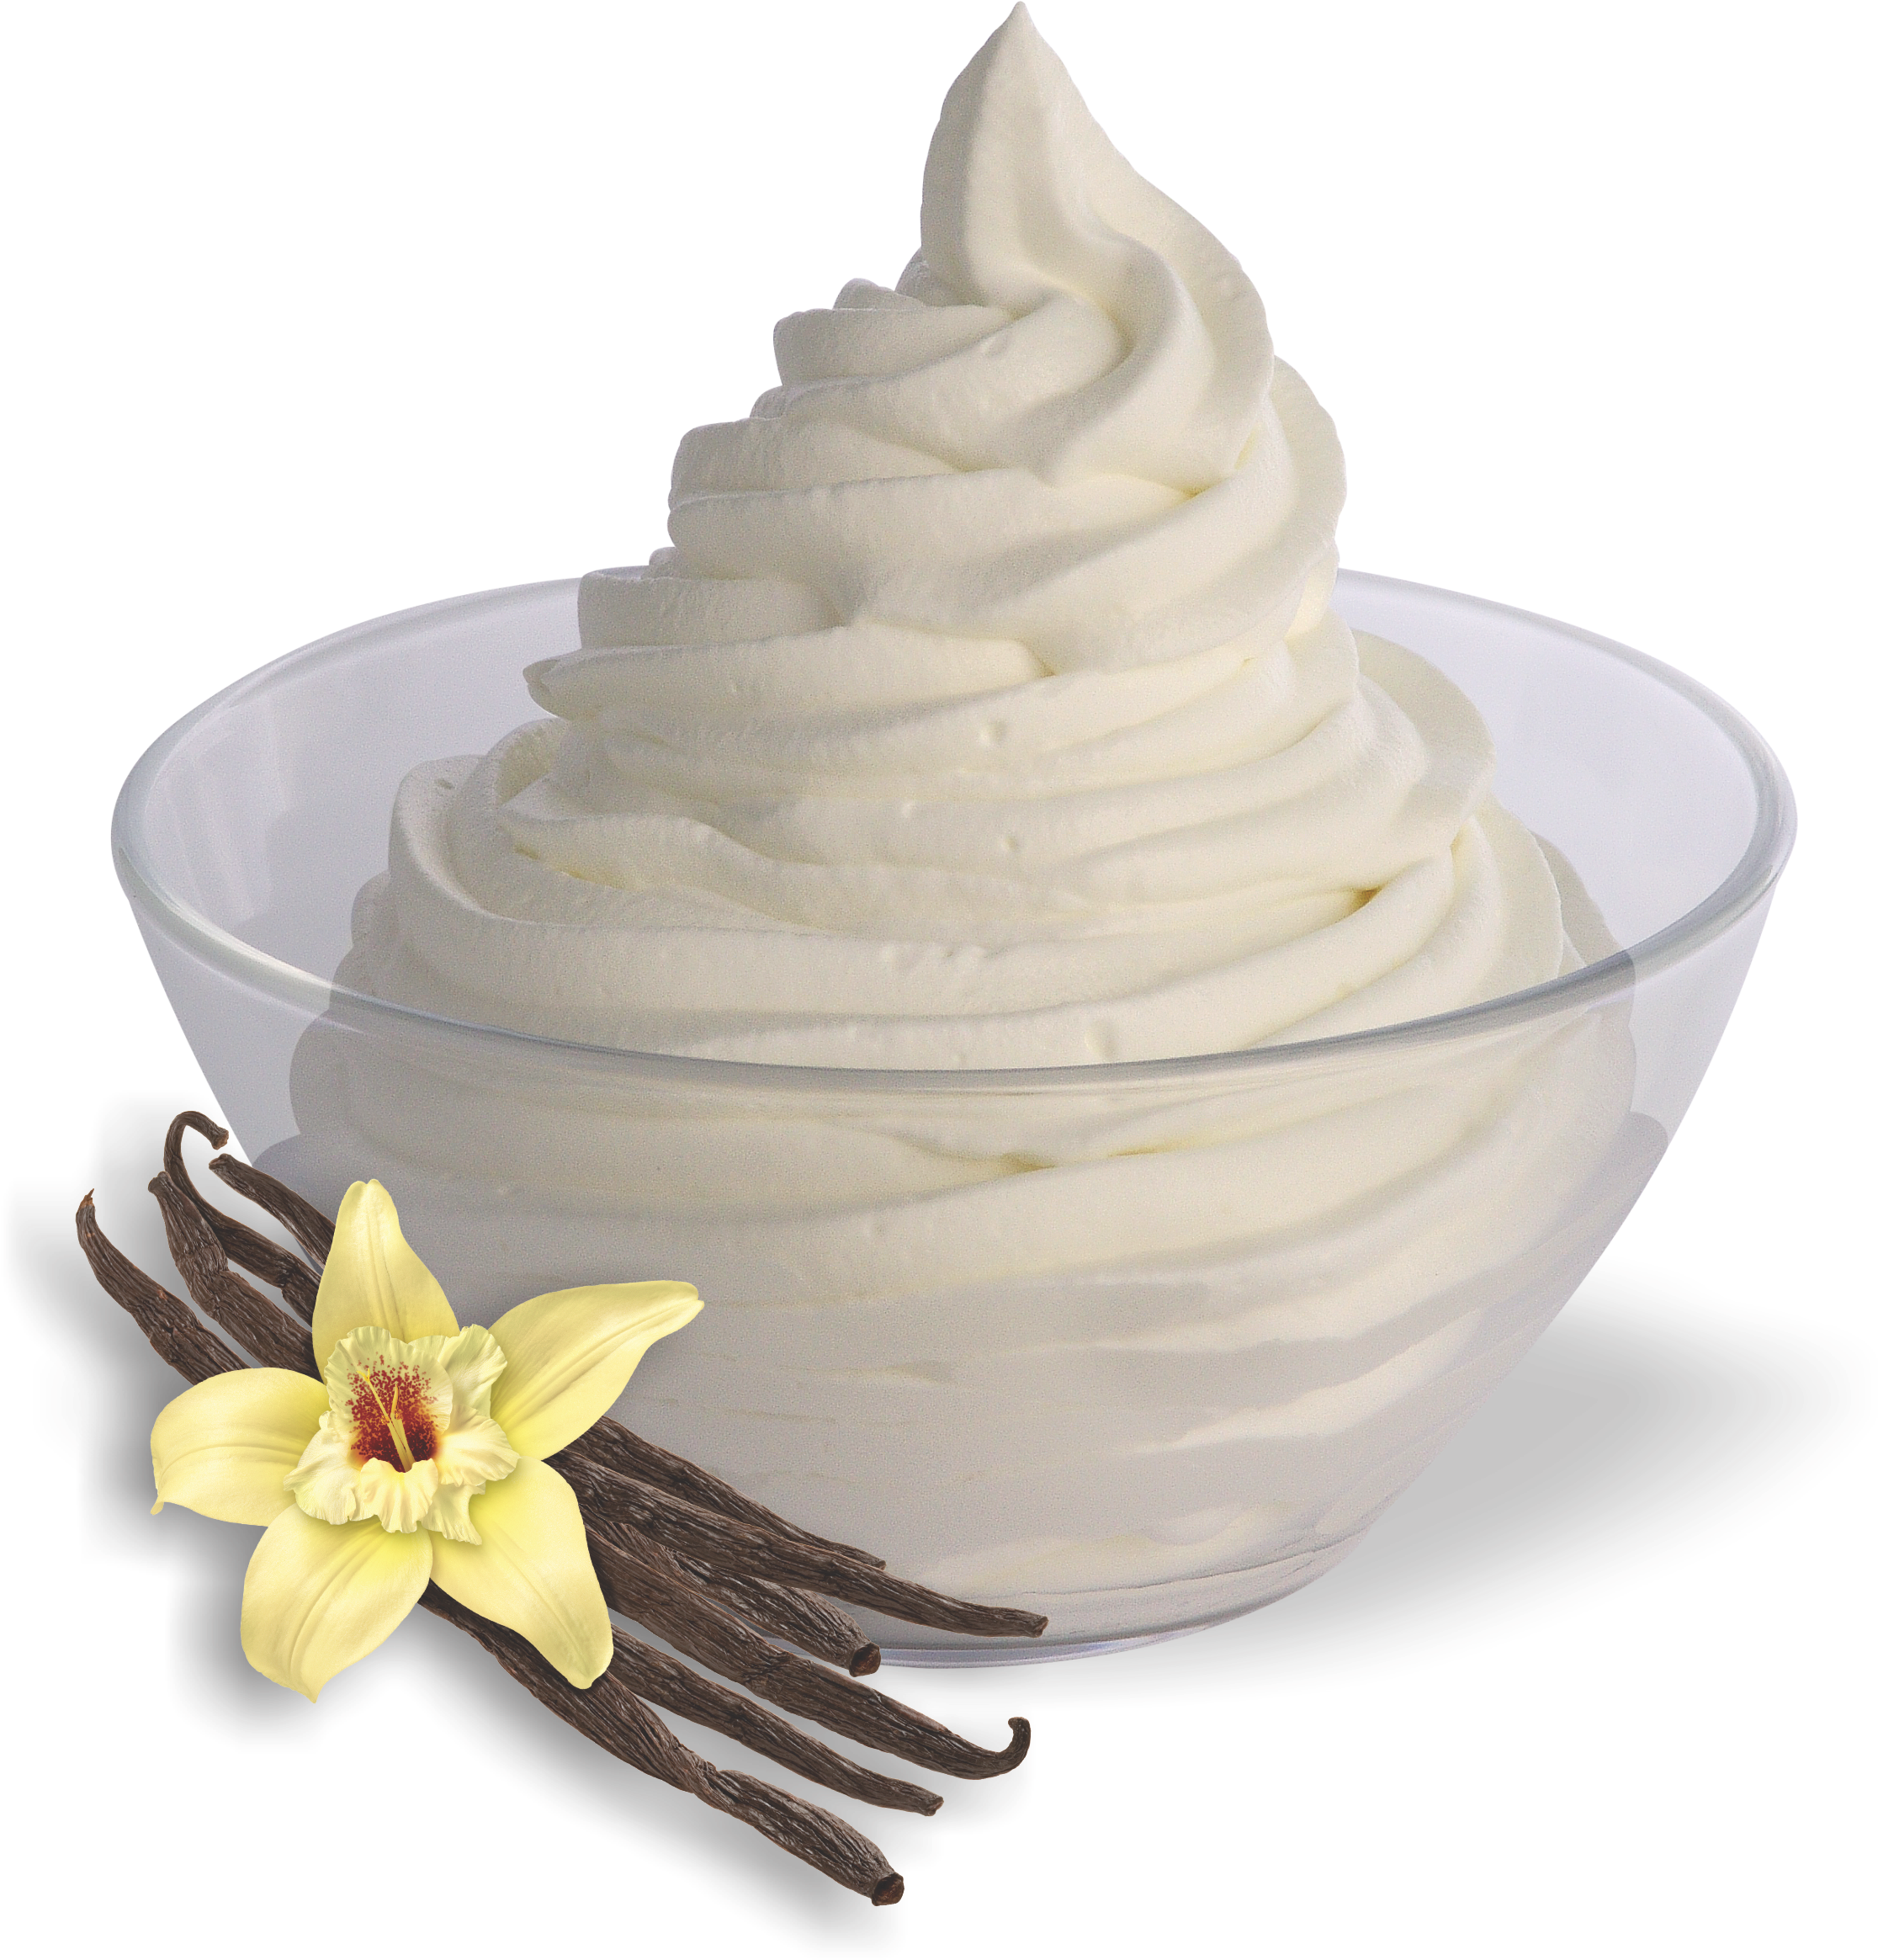 Monalisa Frozen Yogurt Tart - Cartons Of Frozen Yogurt (2430x2353), Png Download